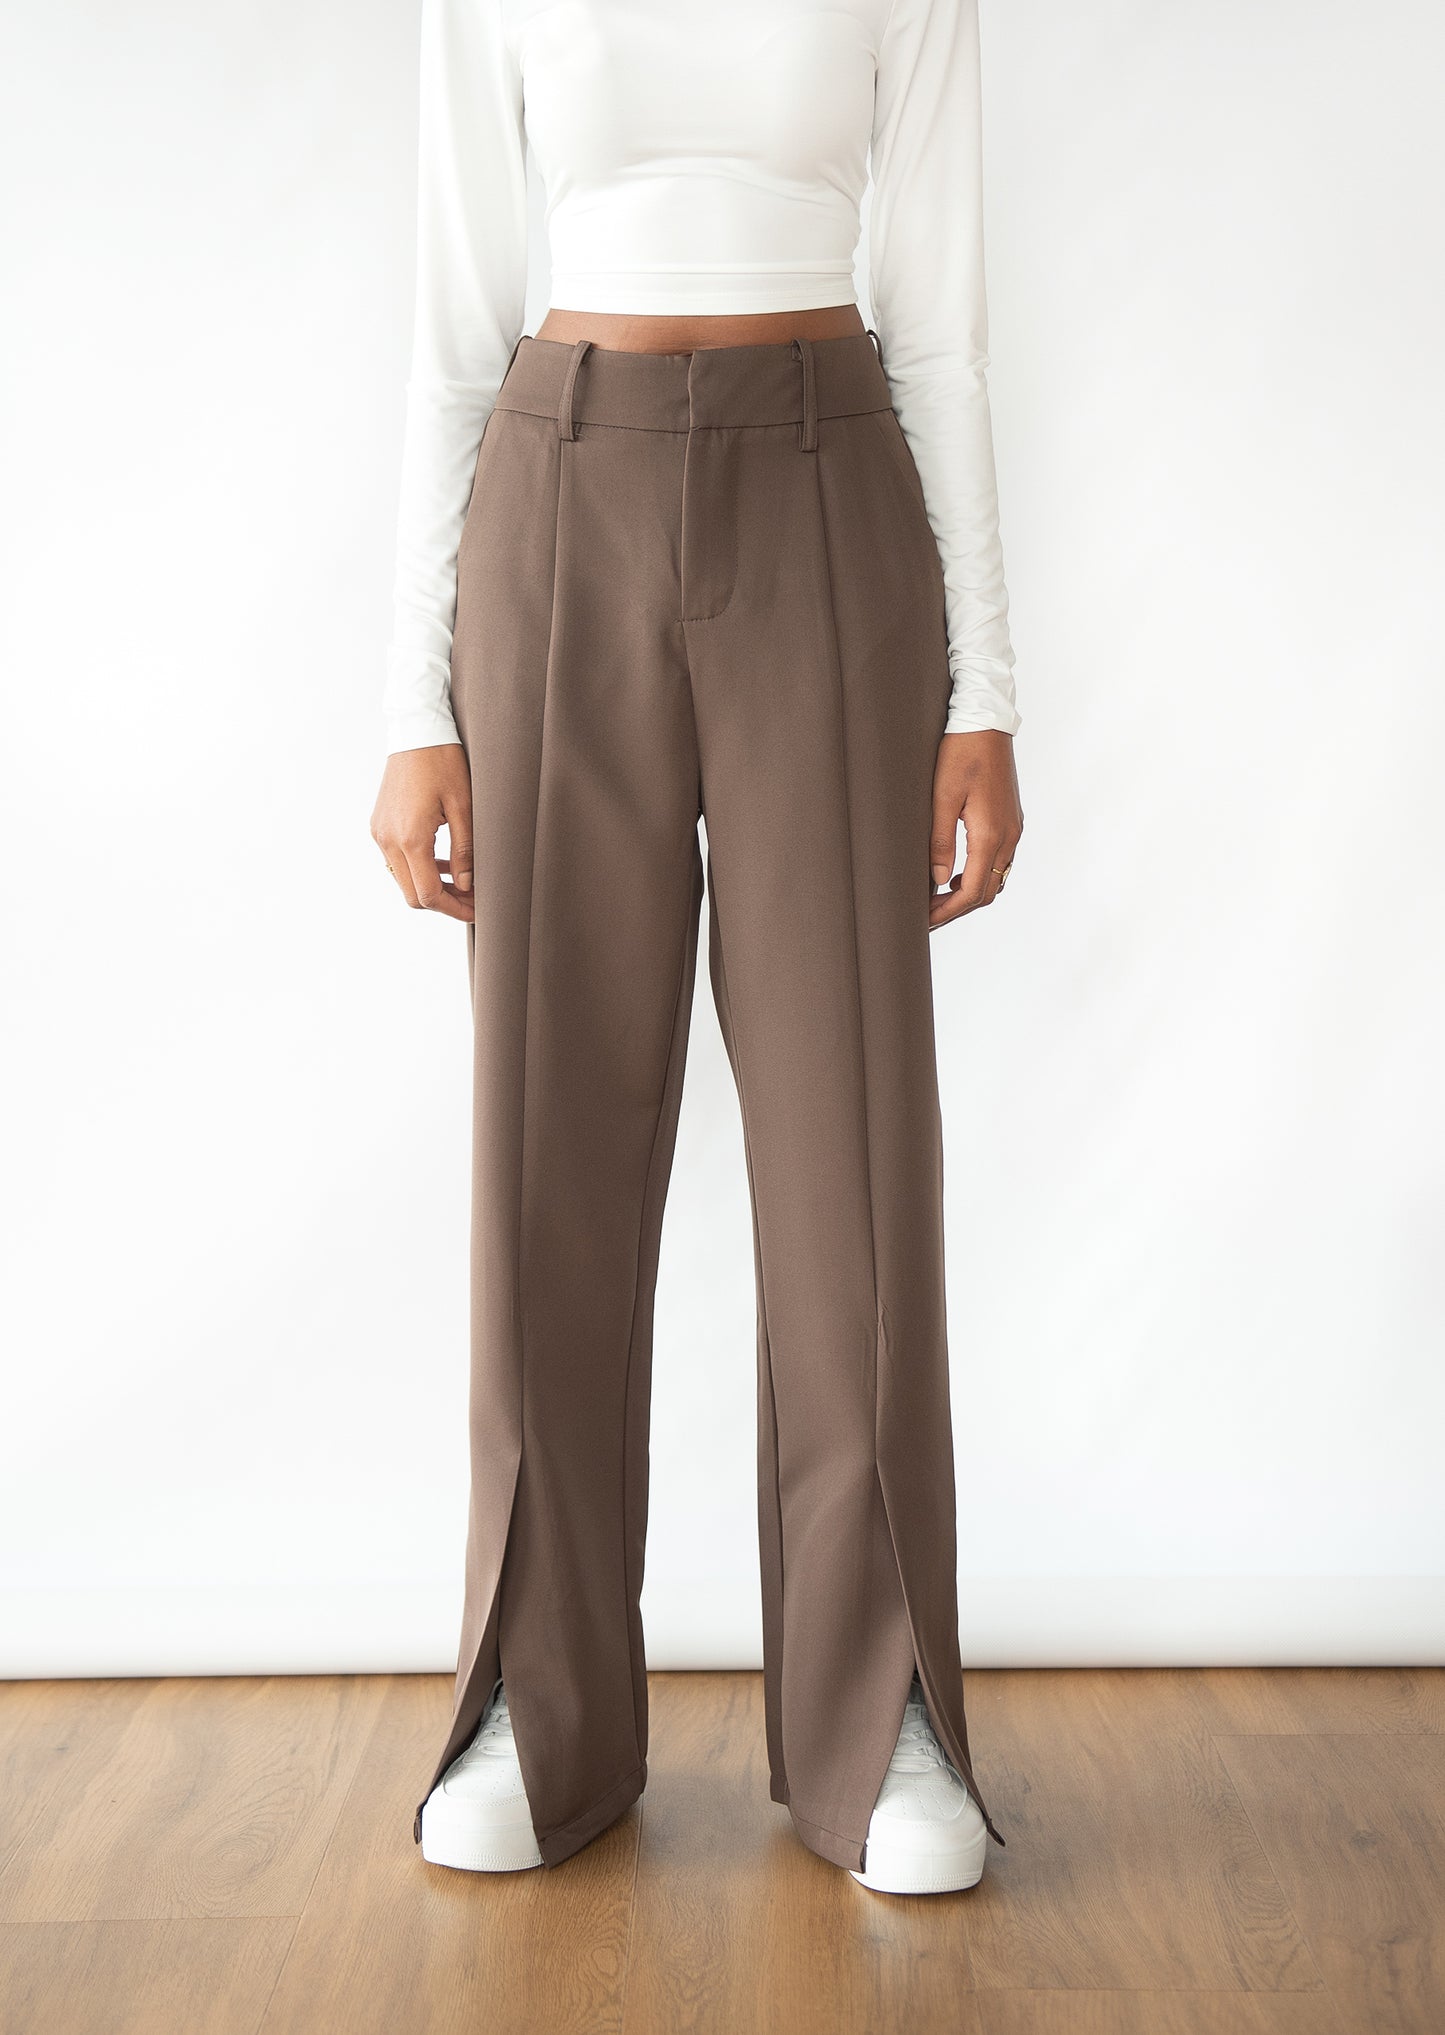 Split front trouser in brown